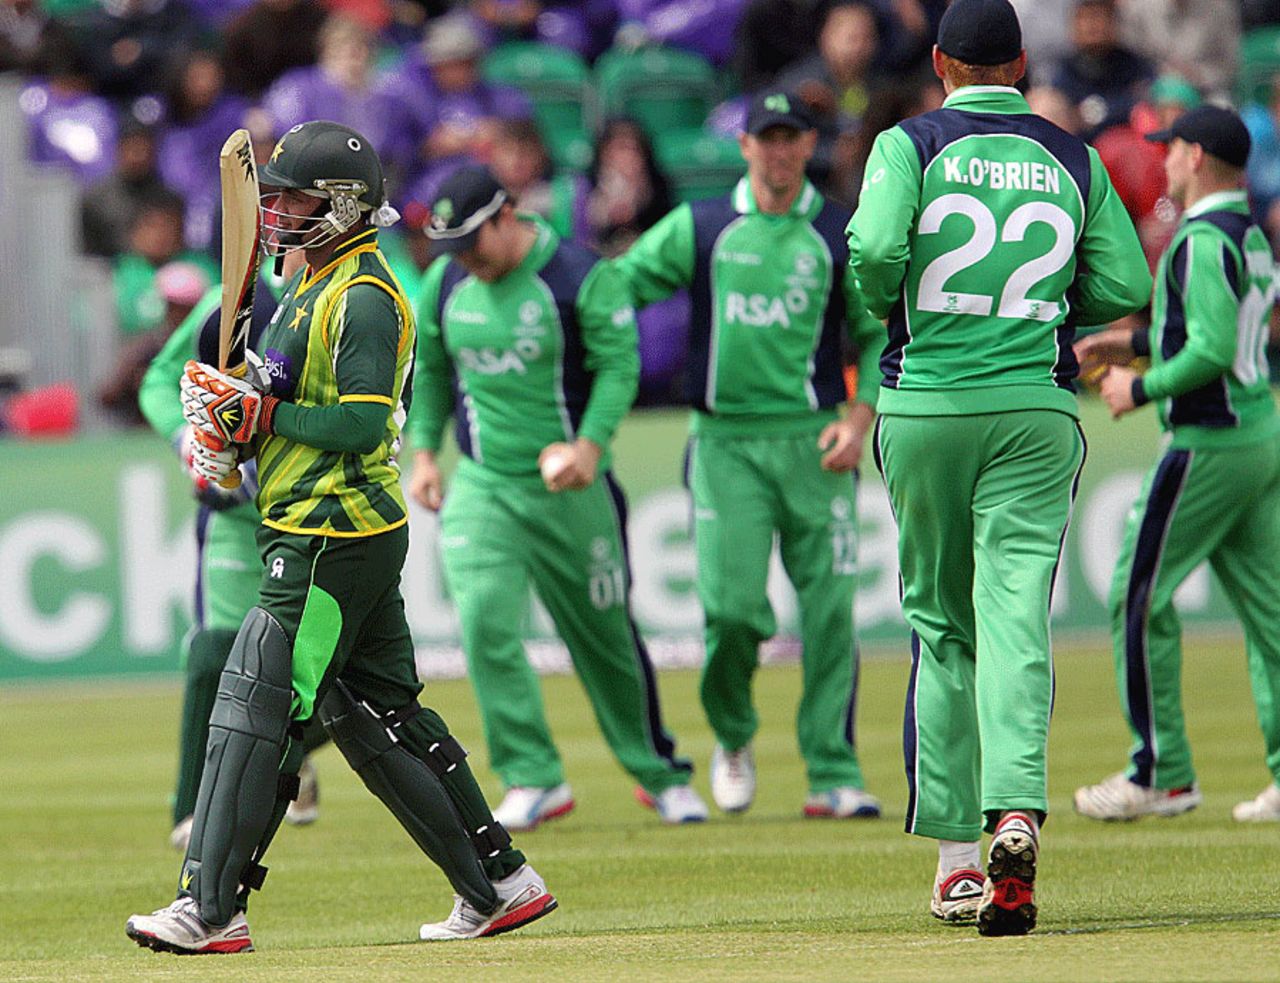 Imran Farhat was dismissed for 9, Ireland v Pakistan, 1st ODI, Dublin, May 23, 2013